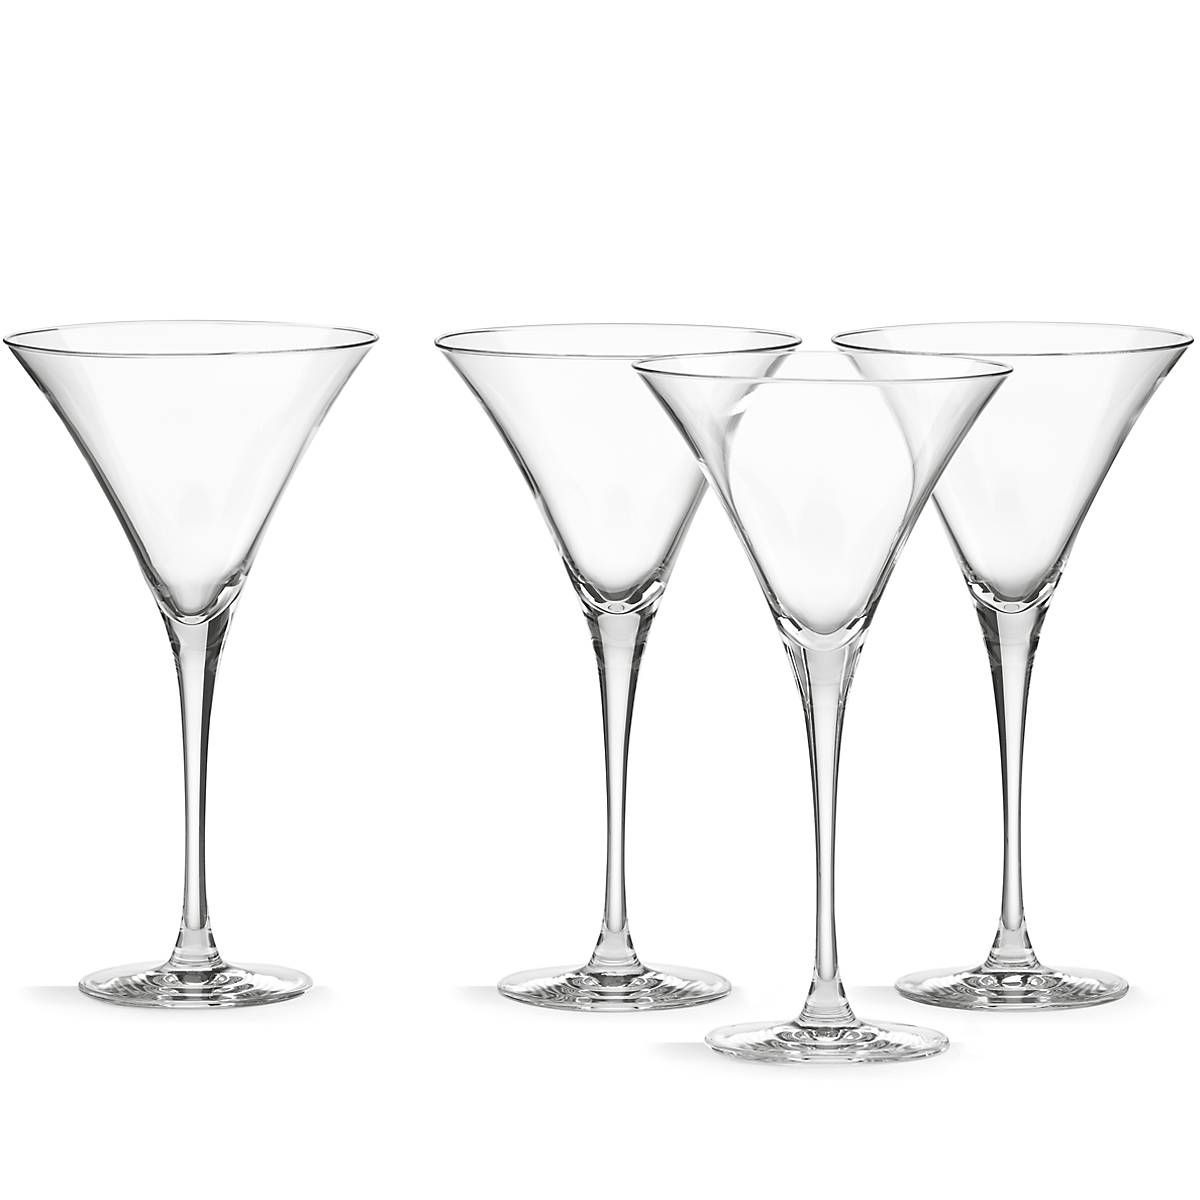 Personalized Martini Glass Set